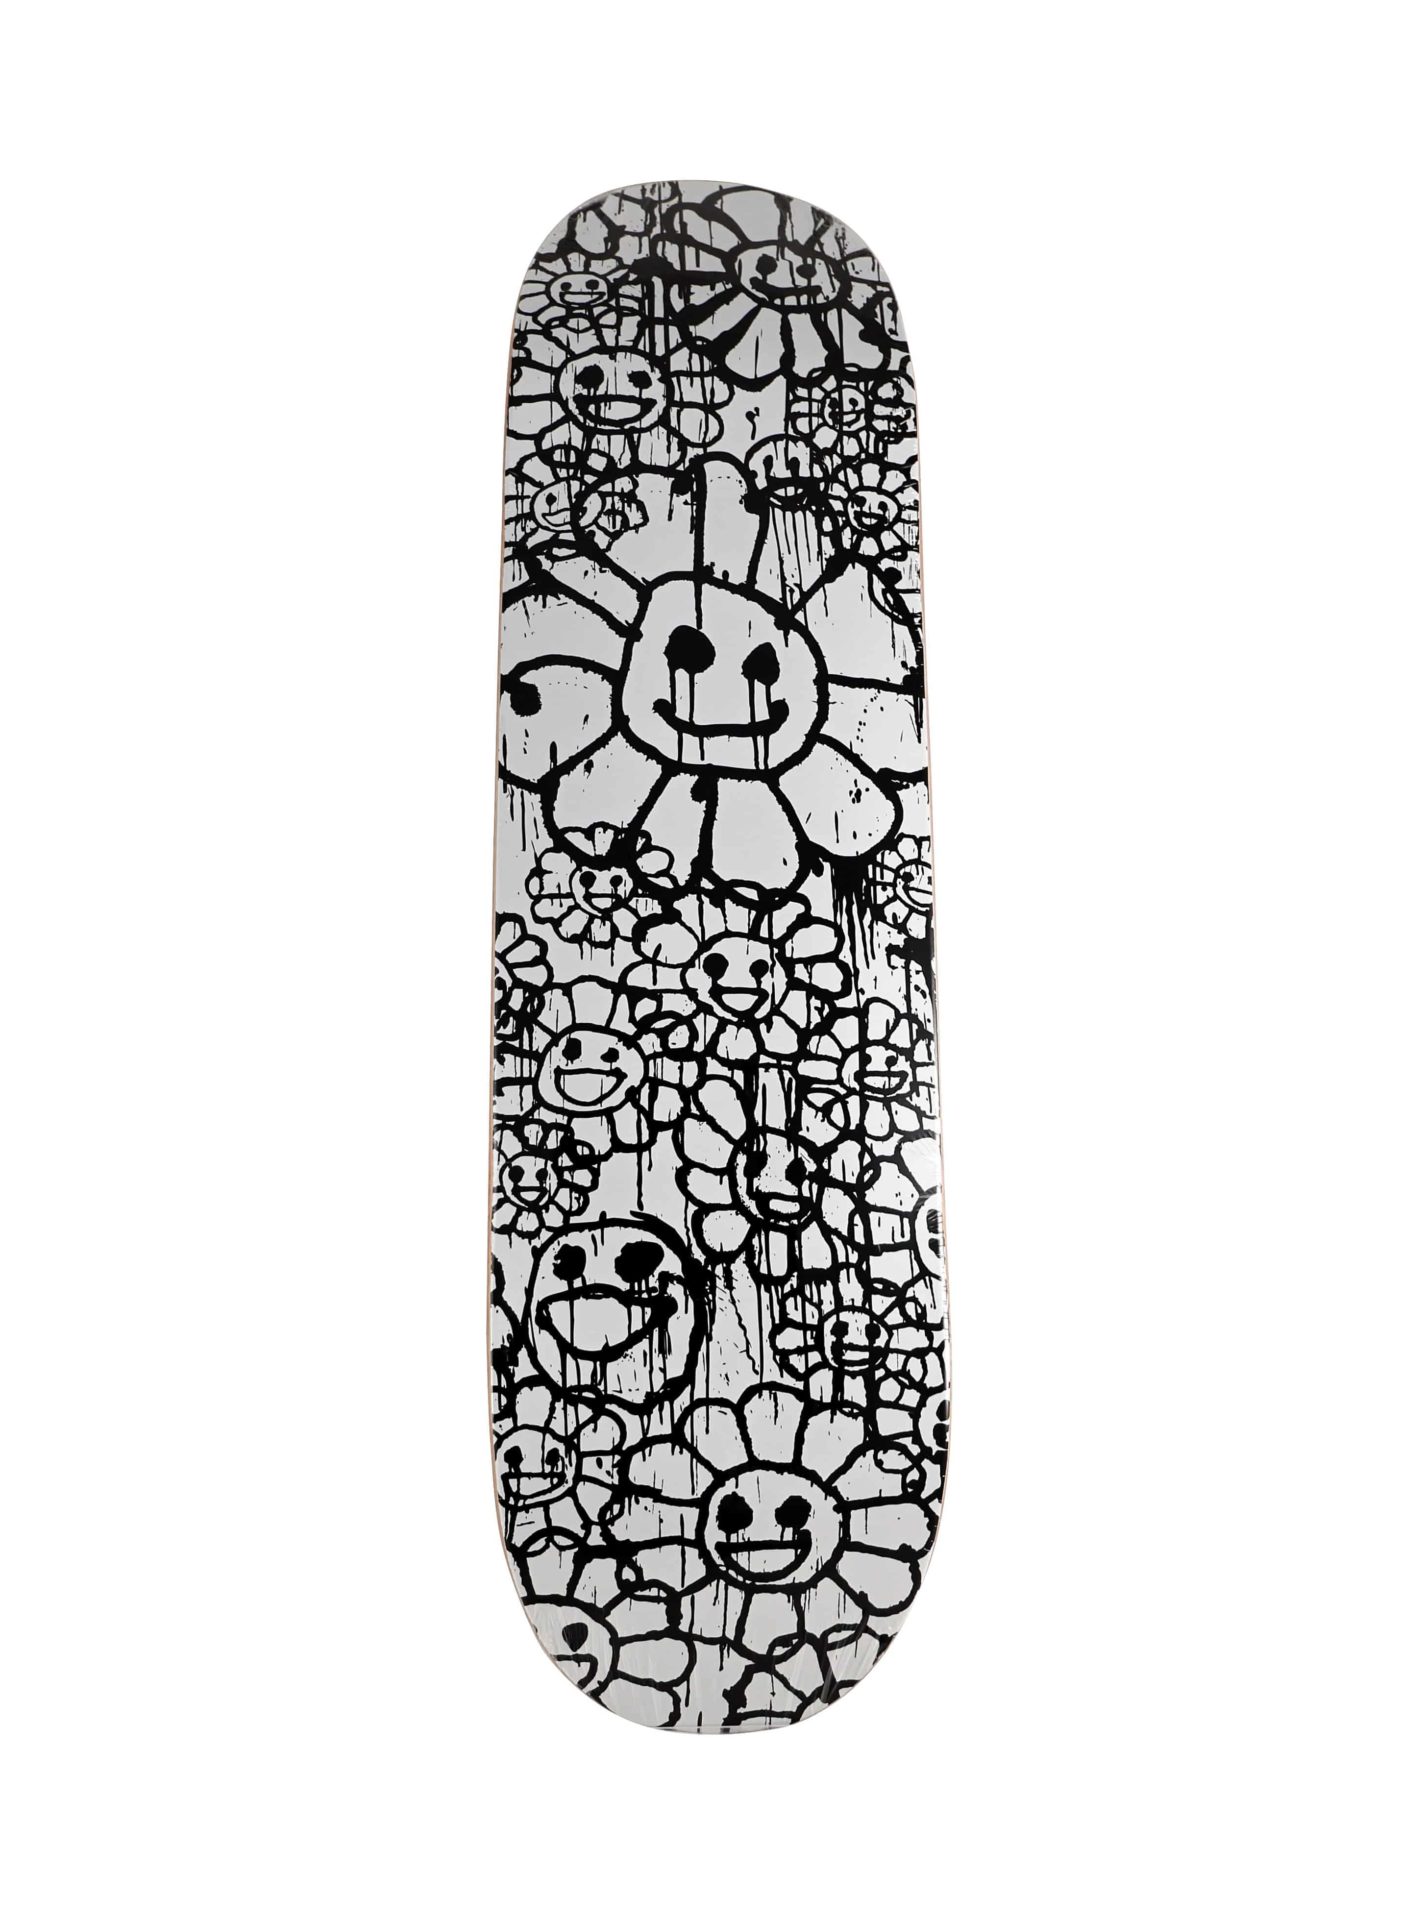 Murakami Madsaki Flower Skateboard Deck | Baer & Bosch